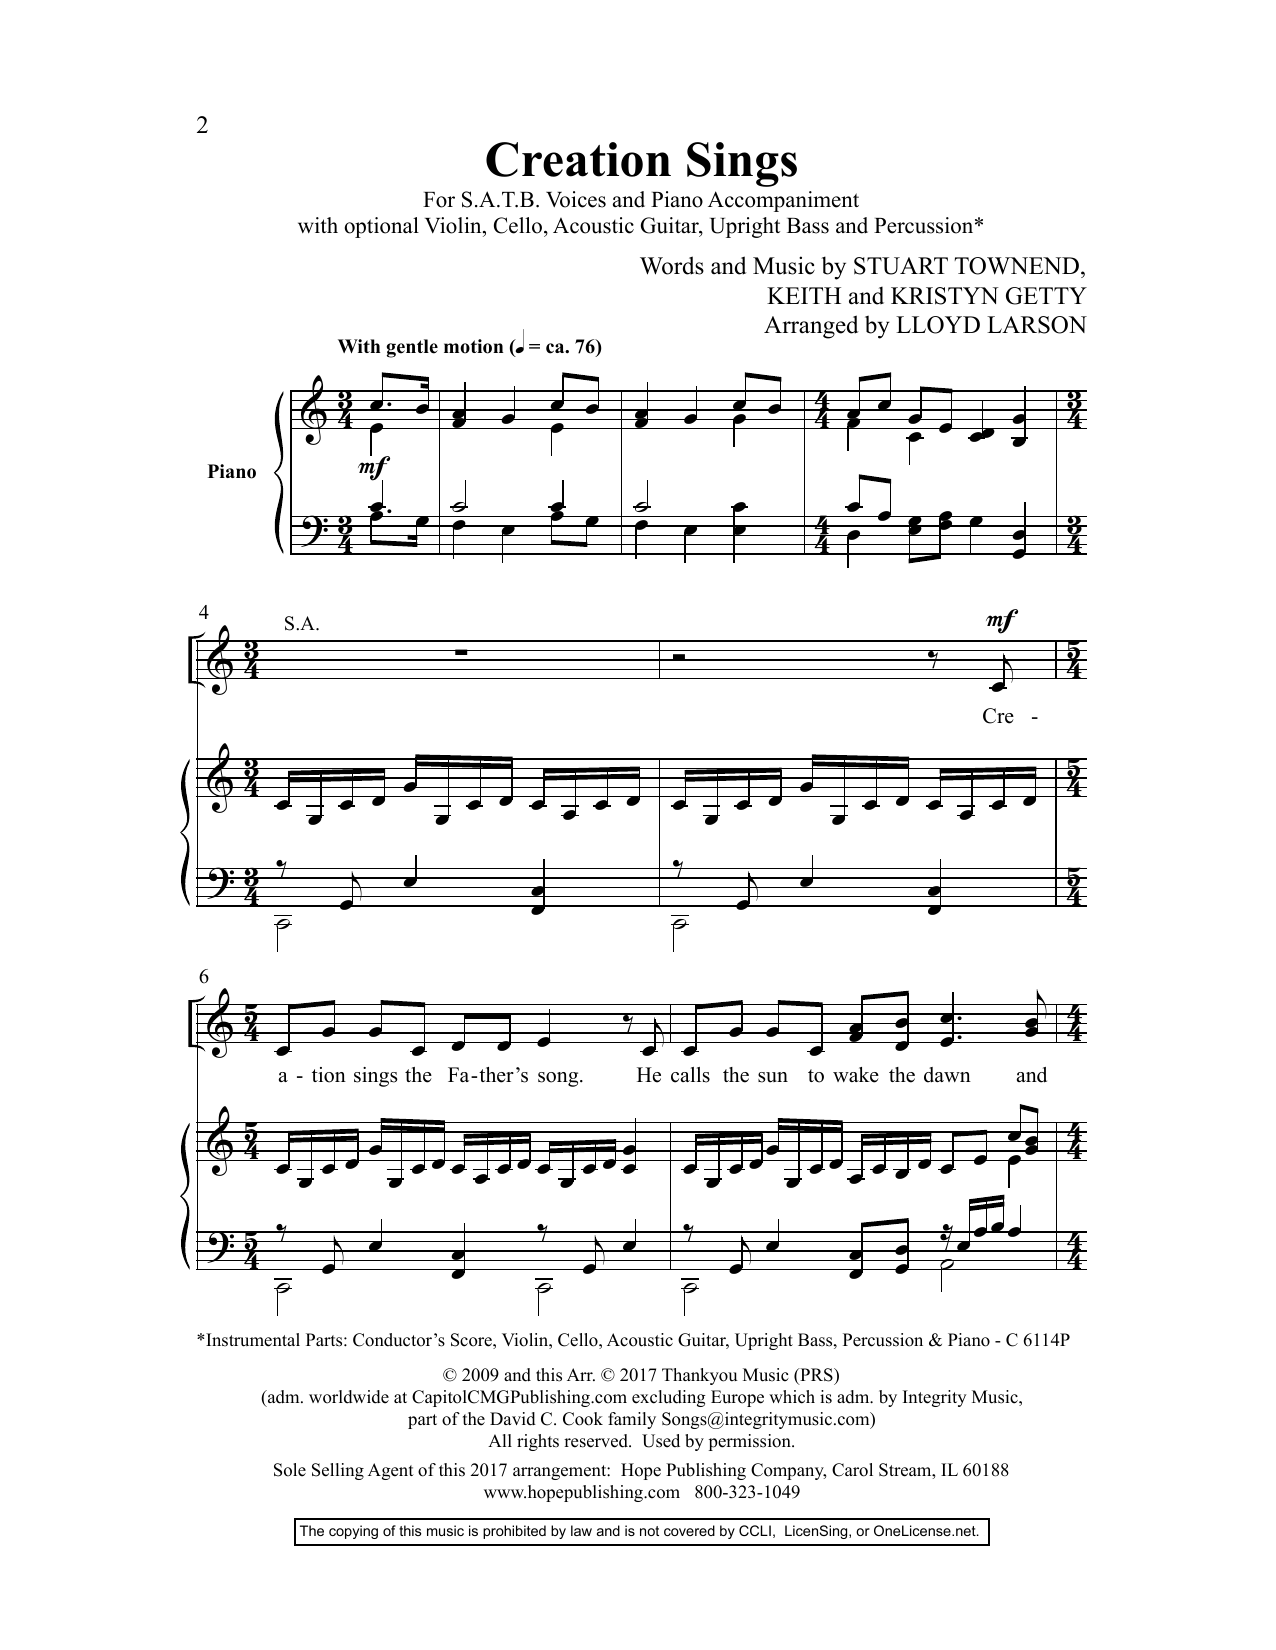 Lloyd Larson Creation Sings Sheet Music Notes & Chords for Choir - Download or Print PDF